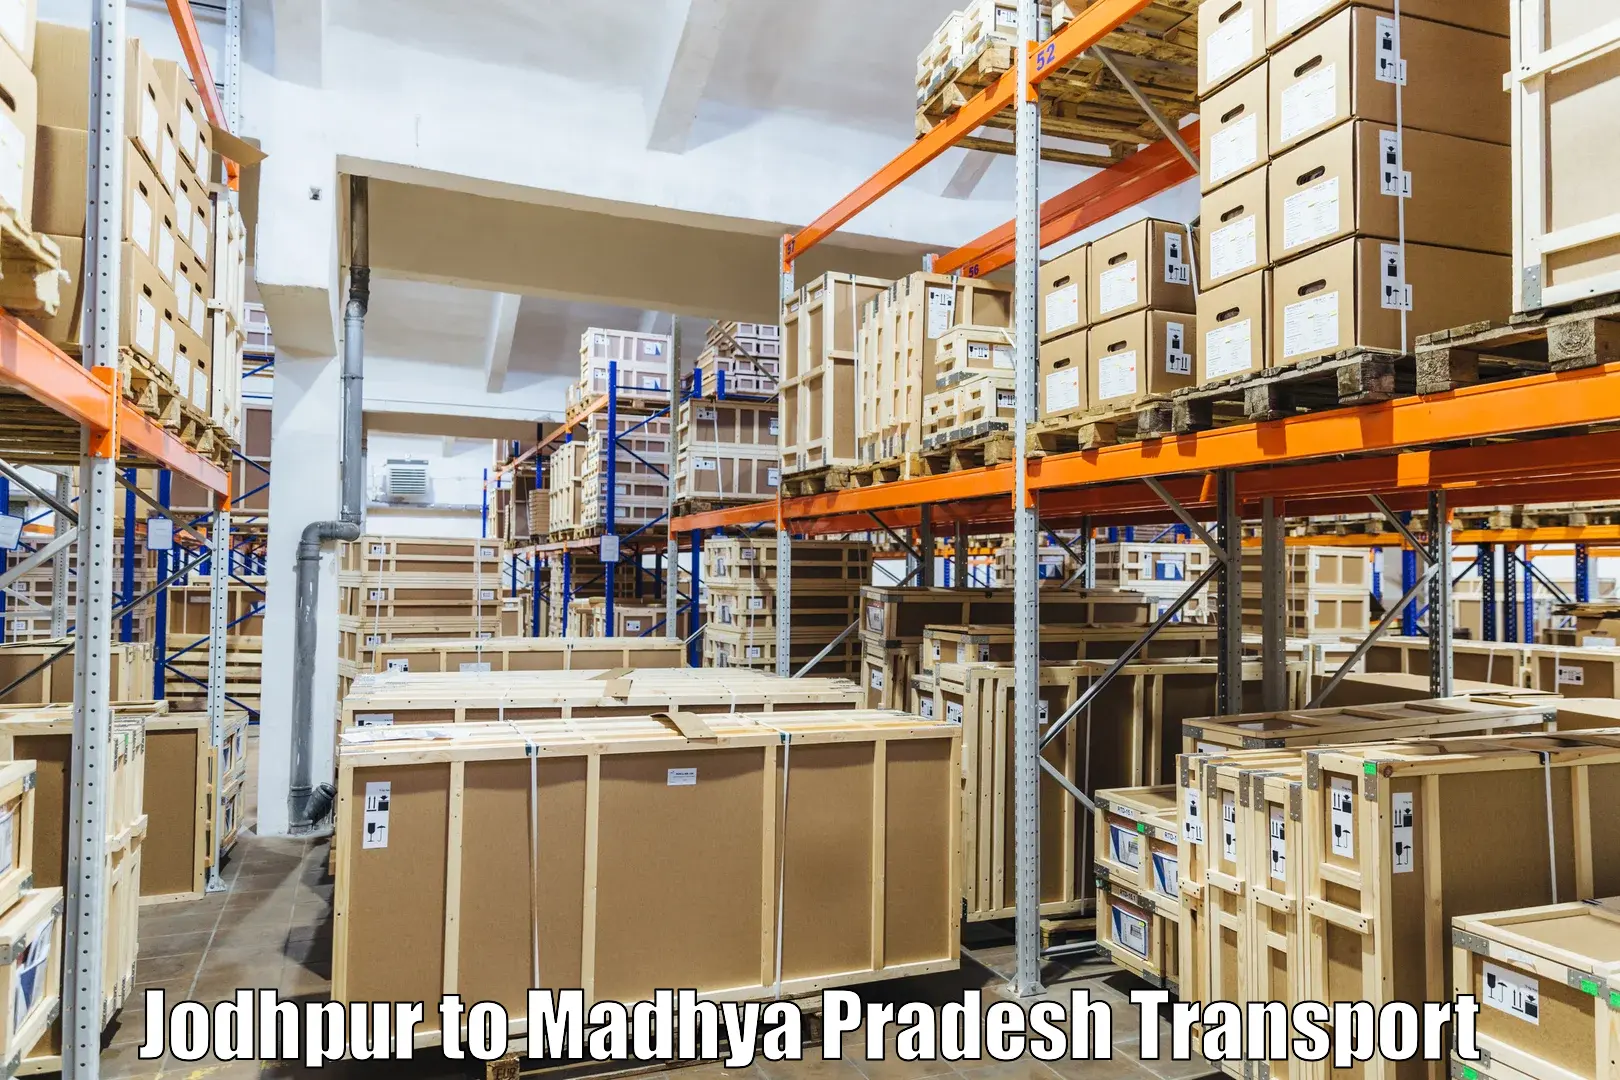 Daily parcel service transport in Jodhpur to Sagar